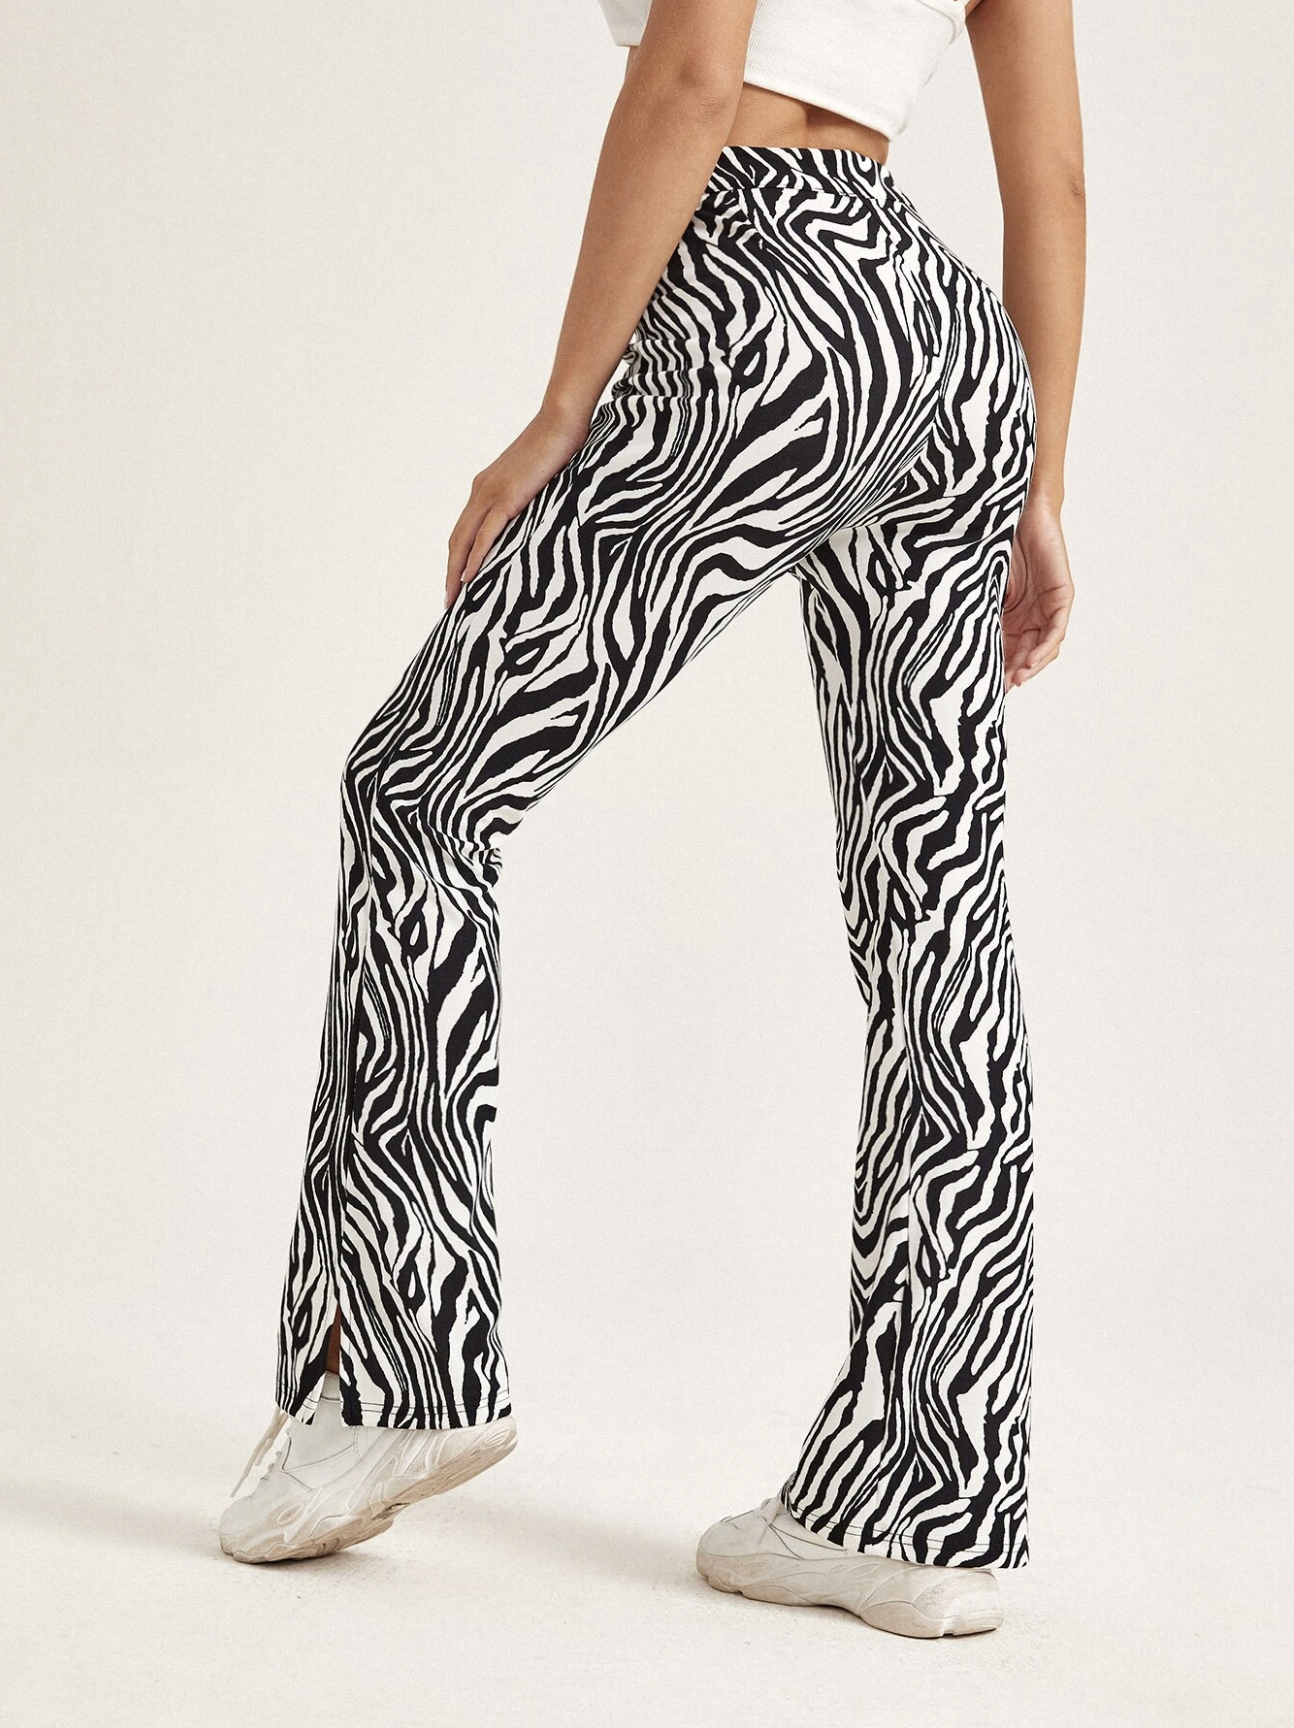 Zebra Striped Print Flare Pants